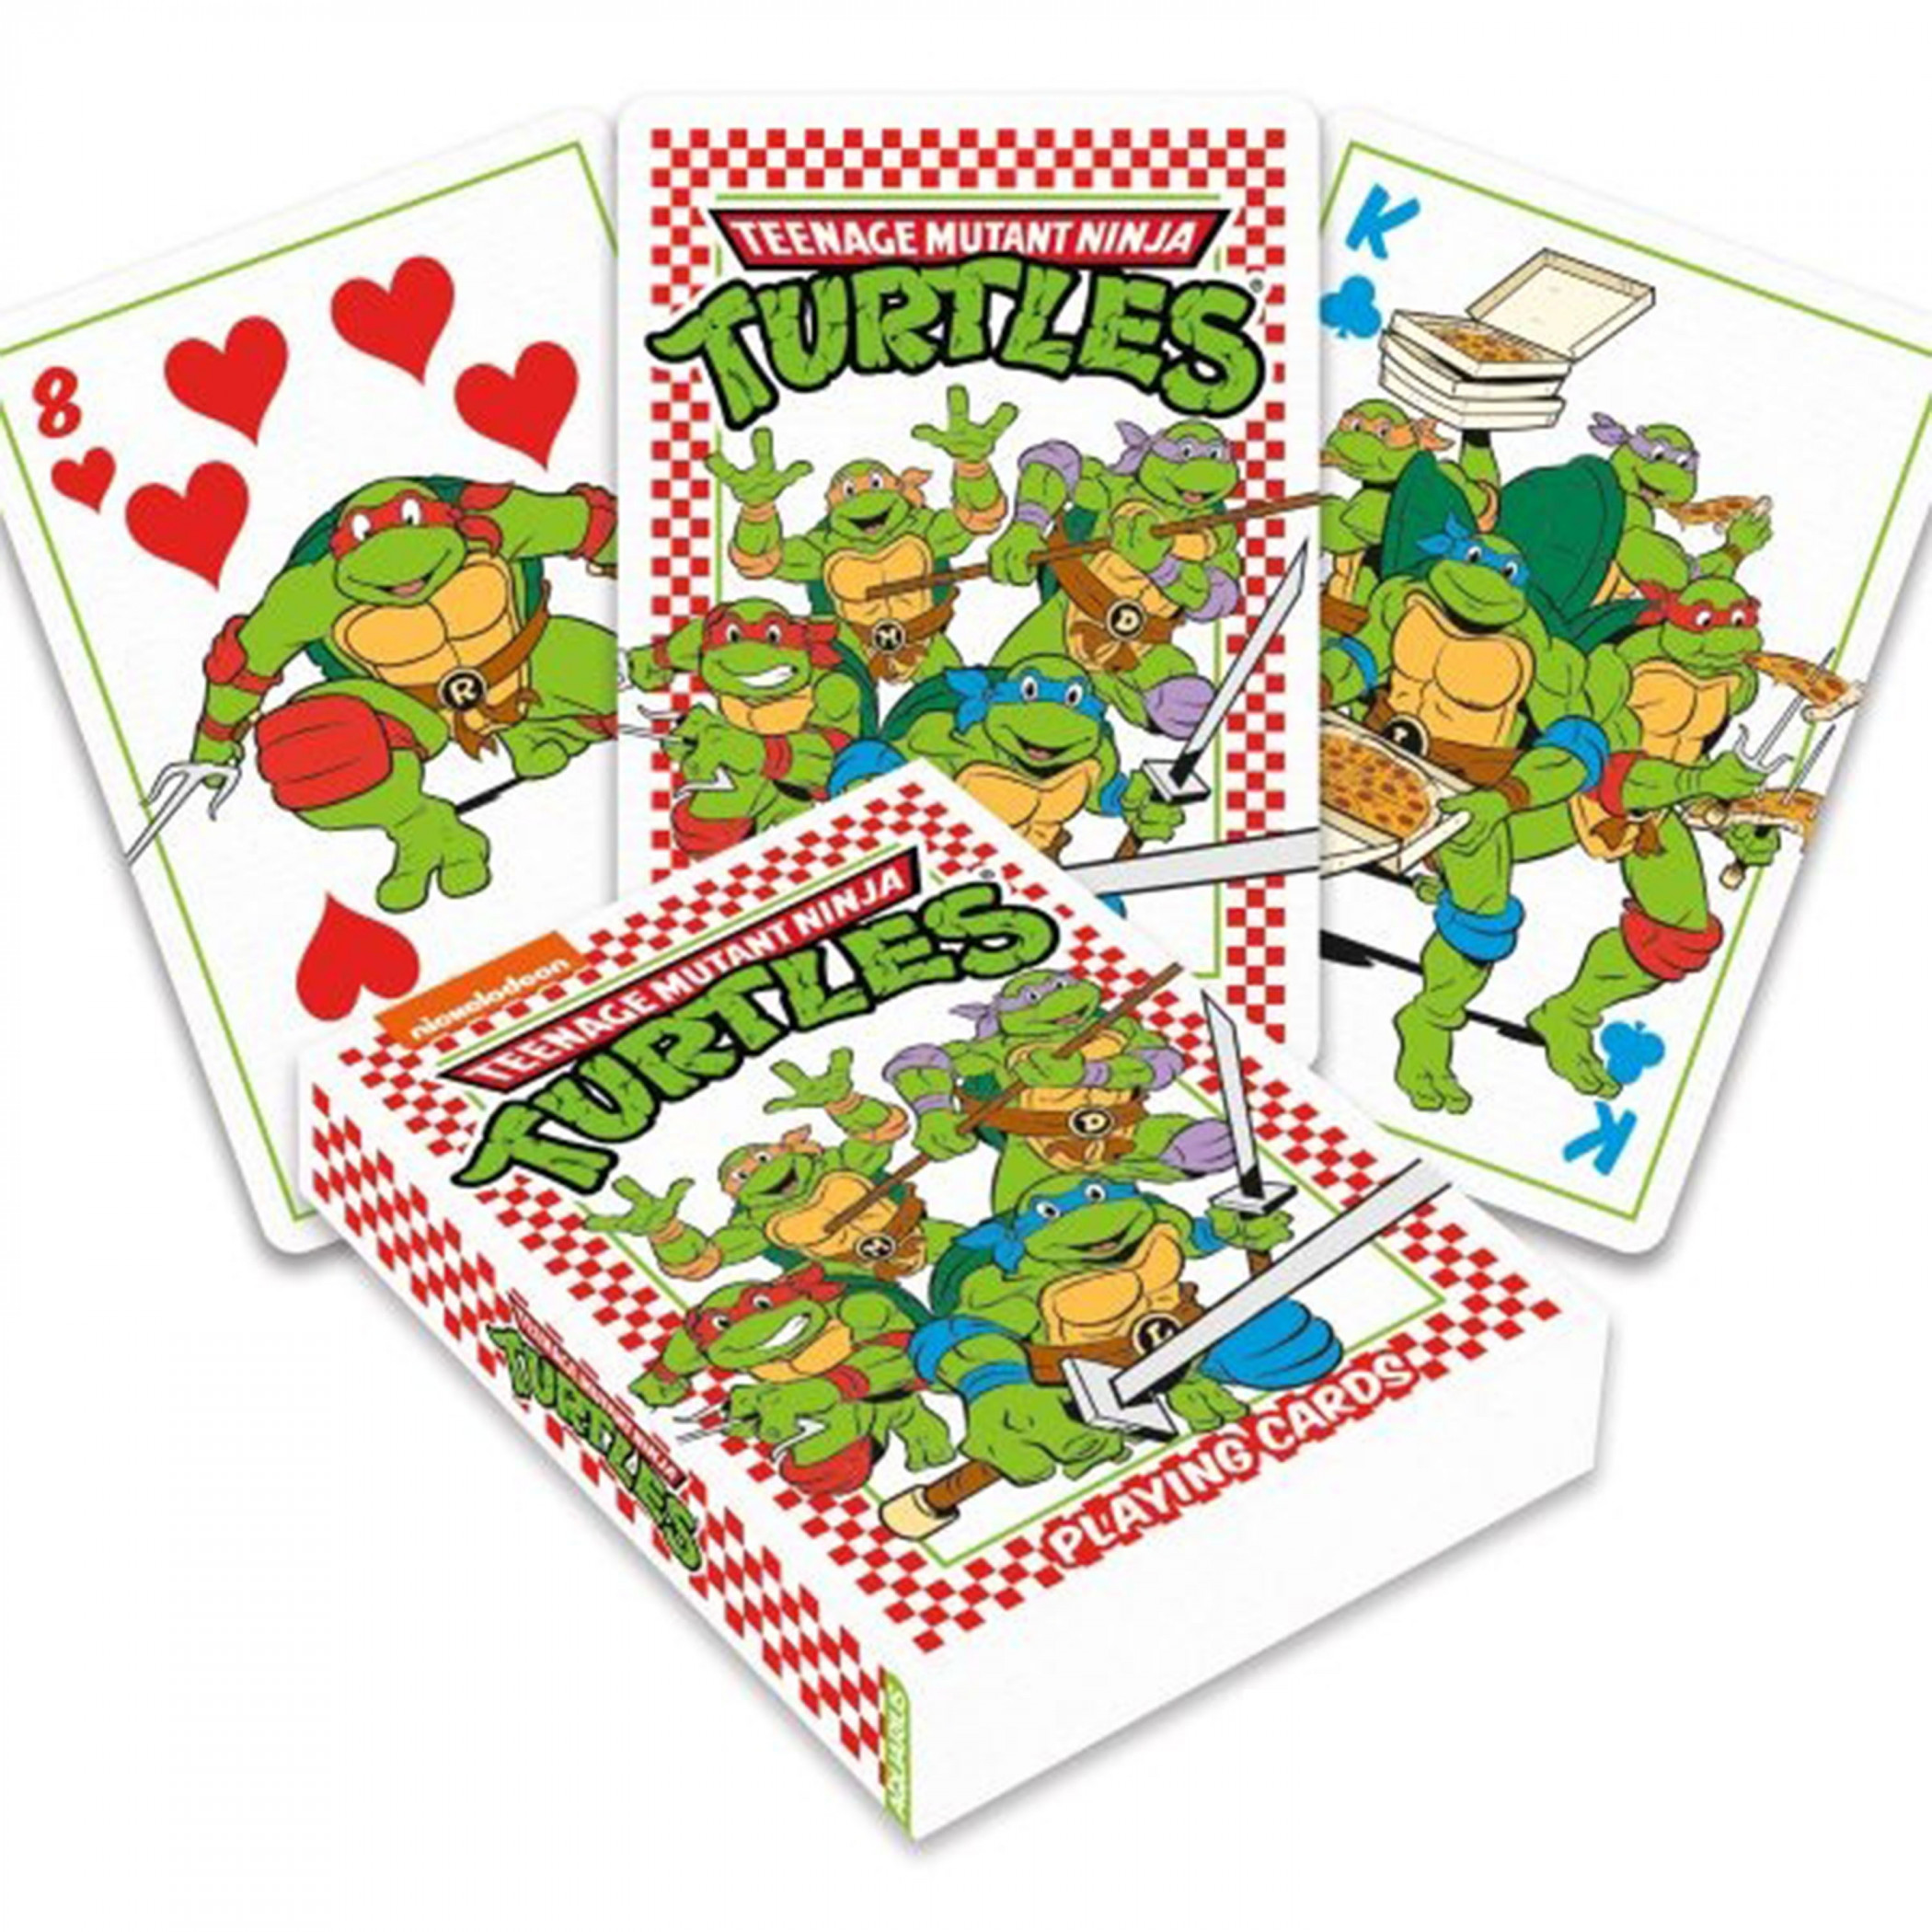 Teenage Mutant Ninja Turtles Deck of Playing Cards